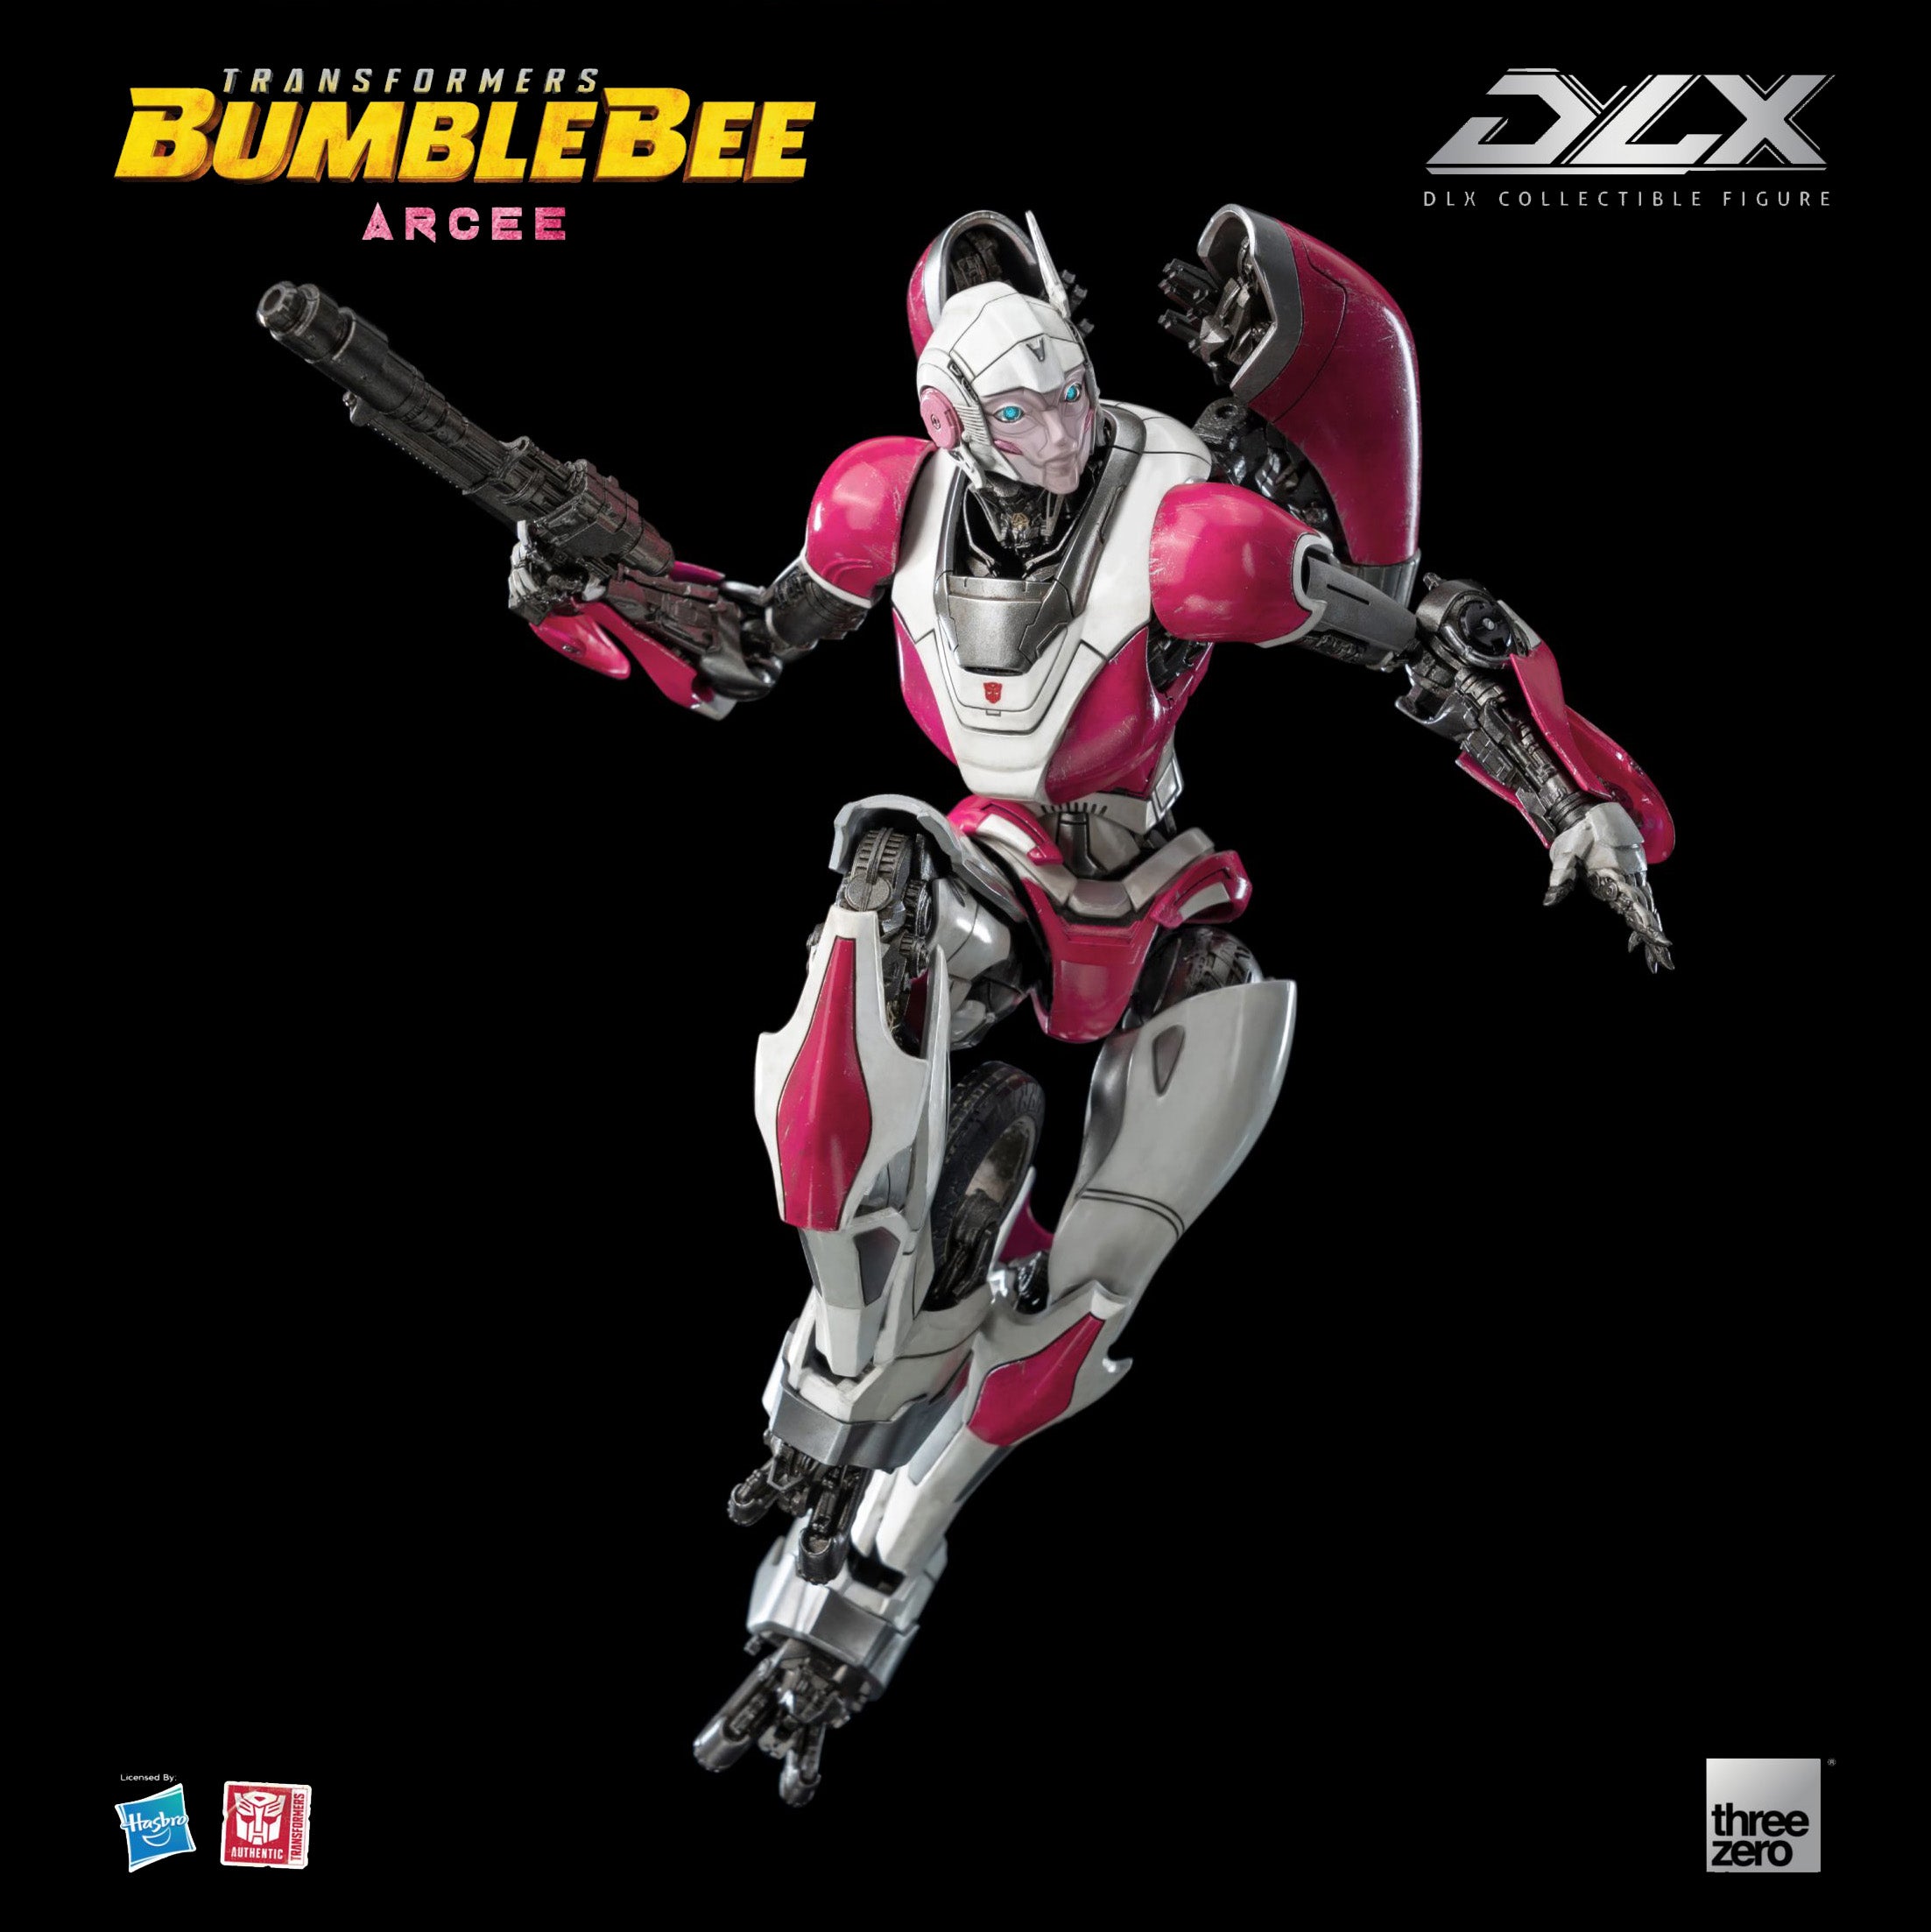 (IN STOCK) threezero - DLX - Transformers: Bumblebee - Arcee - Marvelous Toys